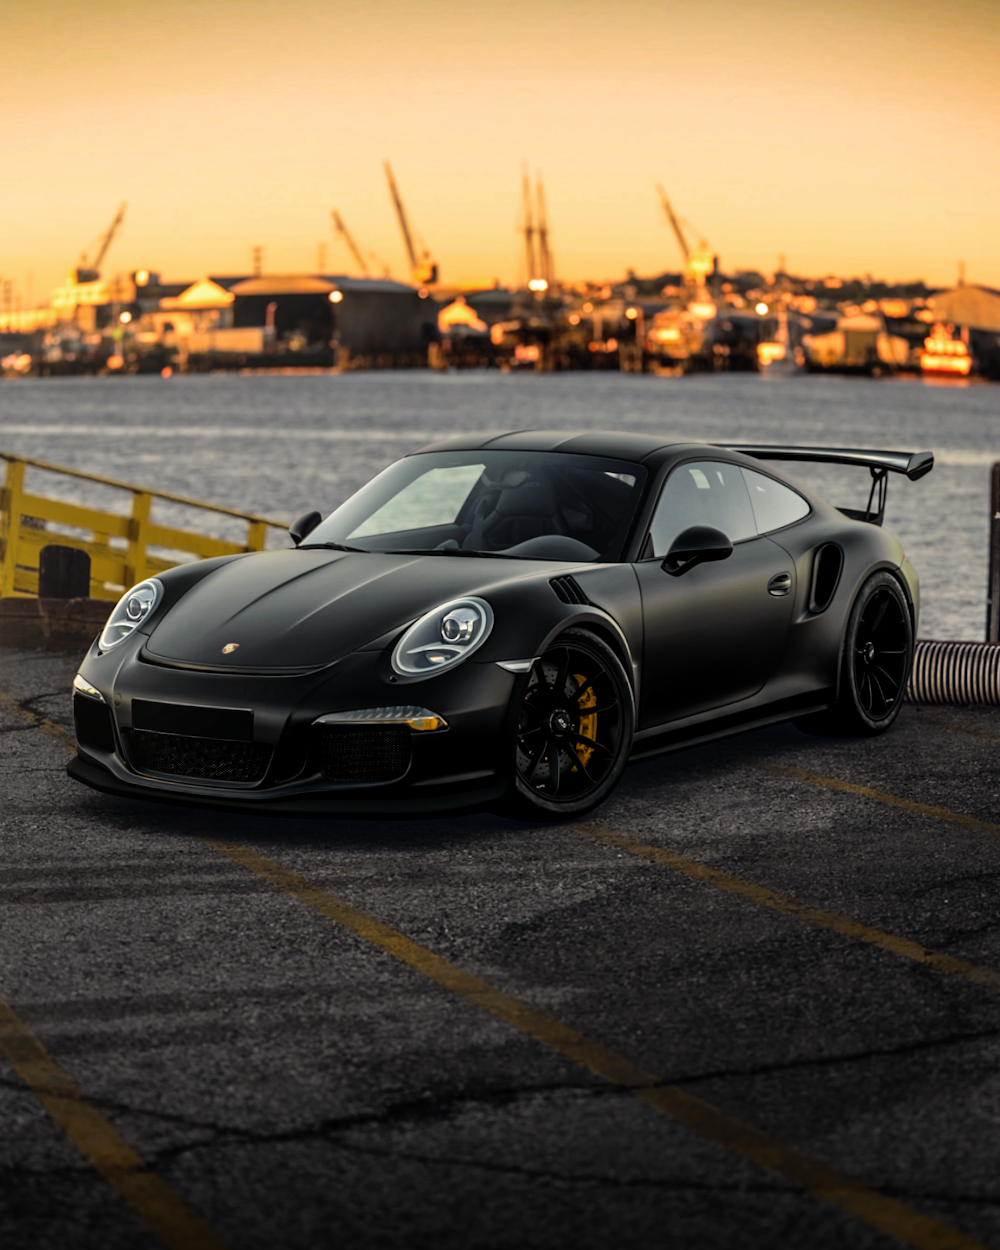 350+ [HQ] Porsche Pictures | Download Free Images & Stock Photos on Unsplash